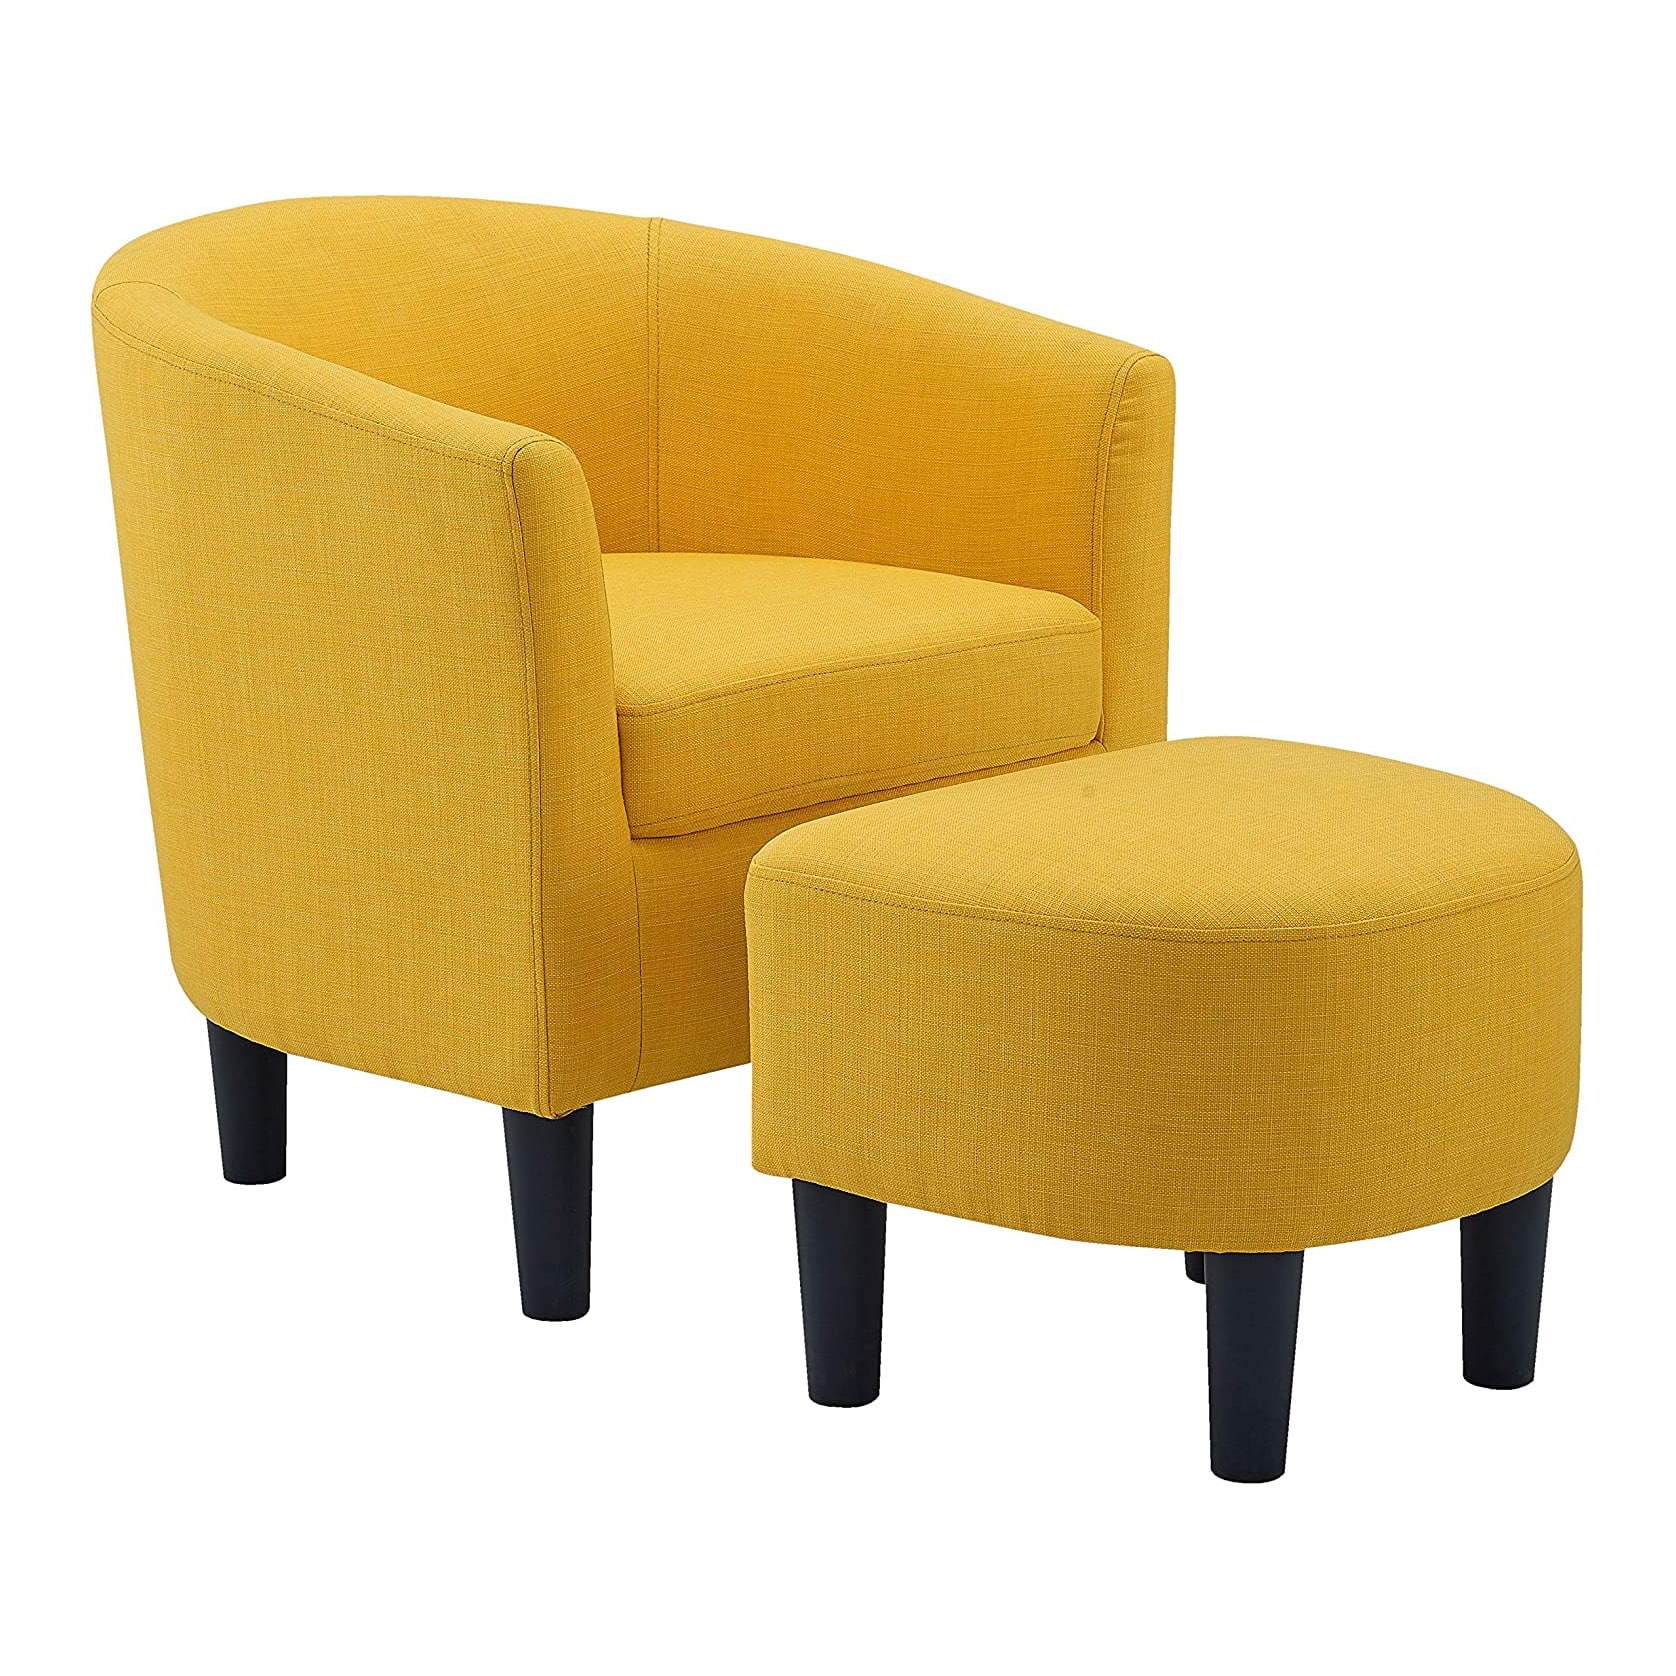 5. Oadeer Home Chair With Ottoman Yellow 